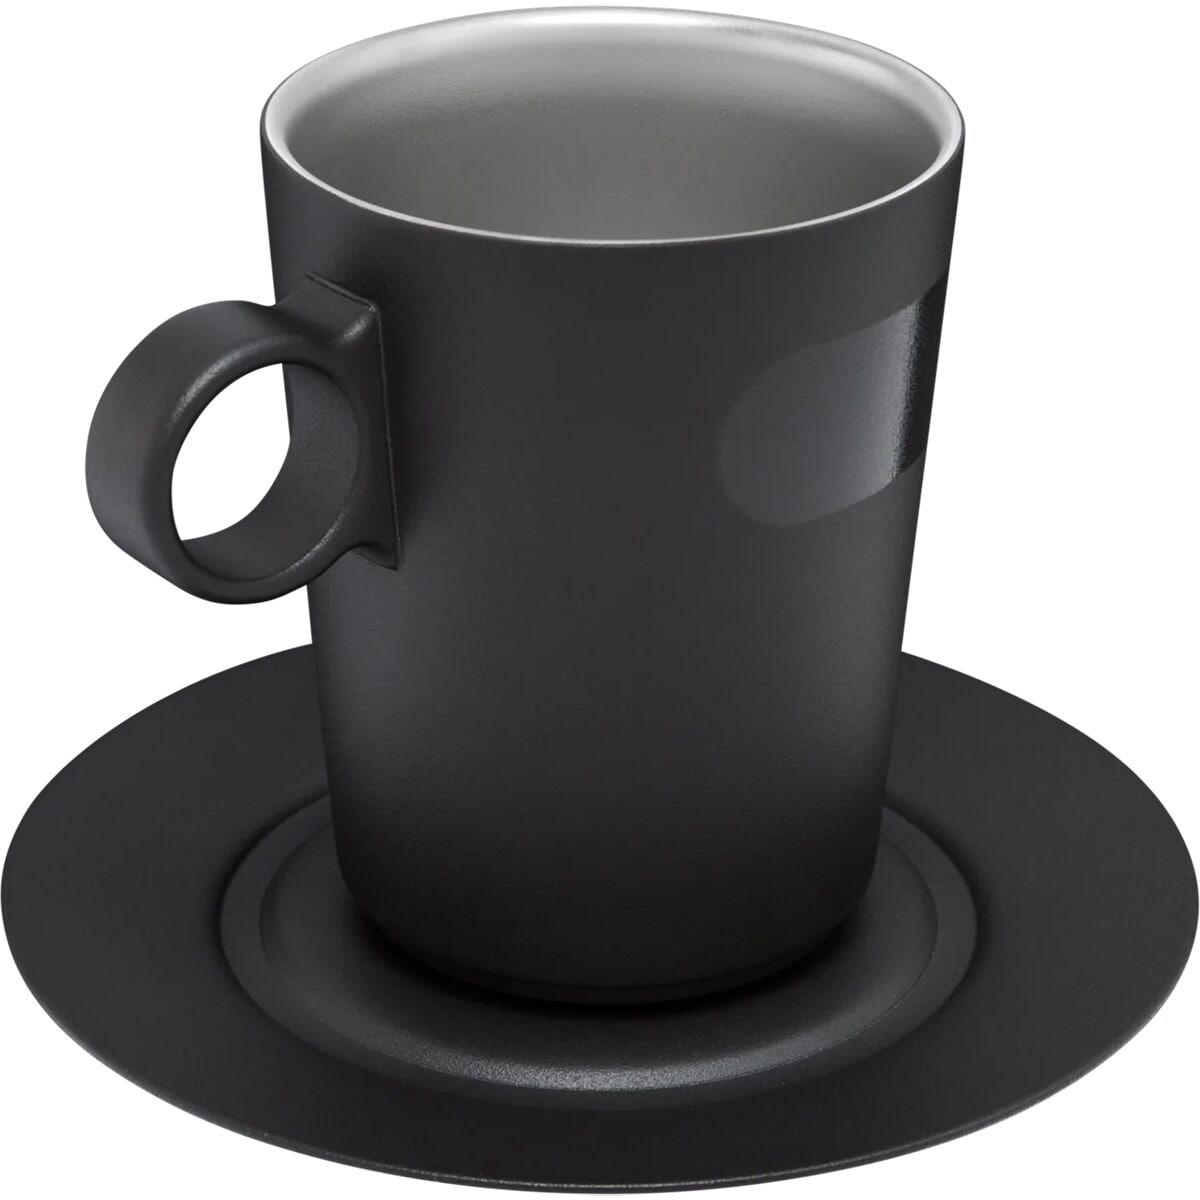 Taza Stanley Daybreak Cafe Latte Cup Negro 1017n De 313 Ml.